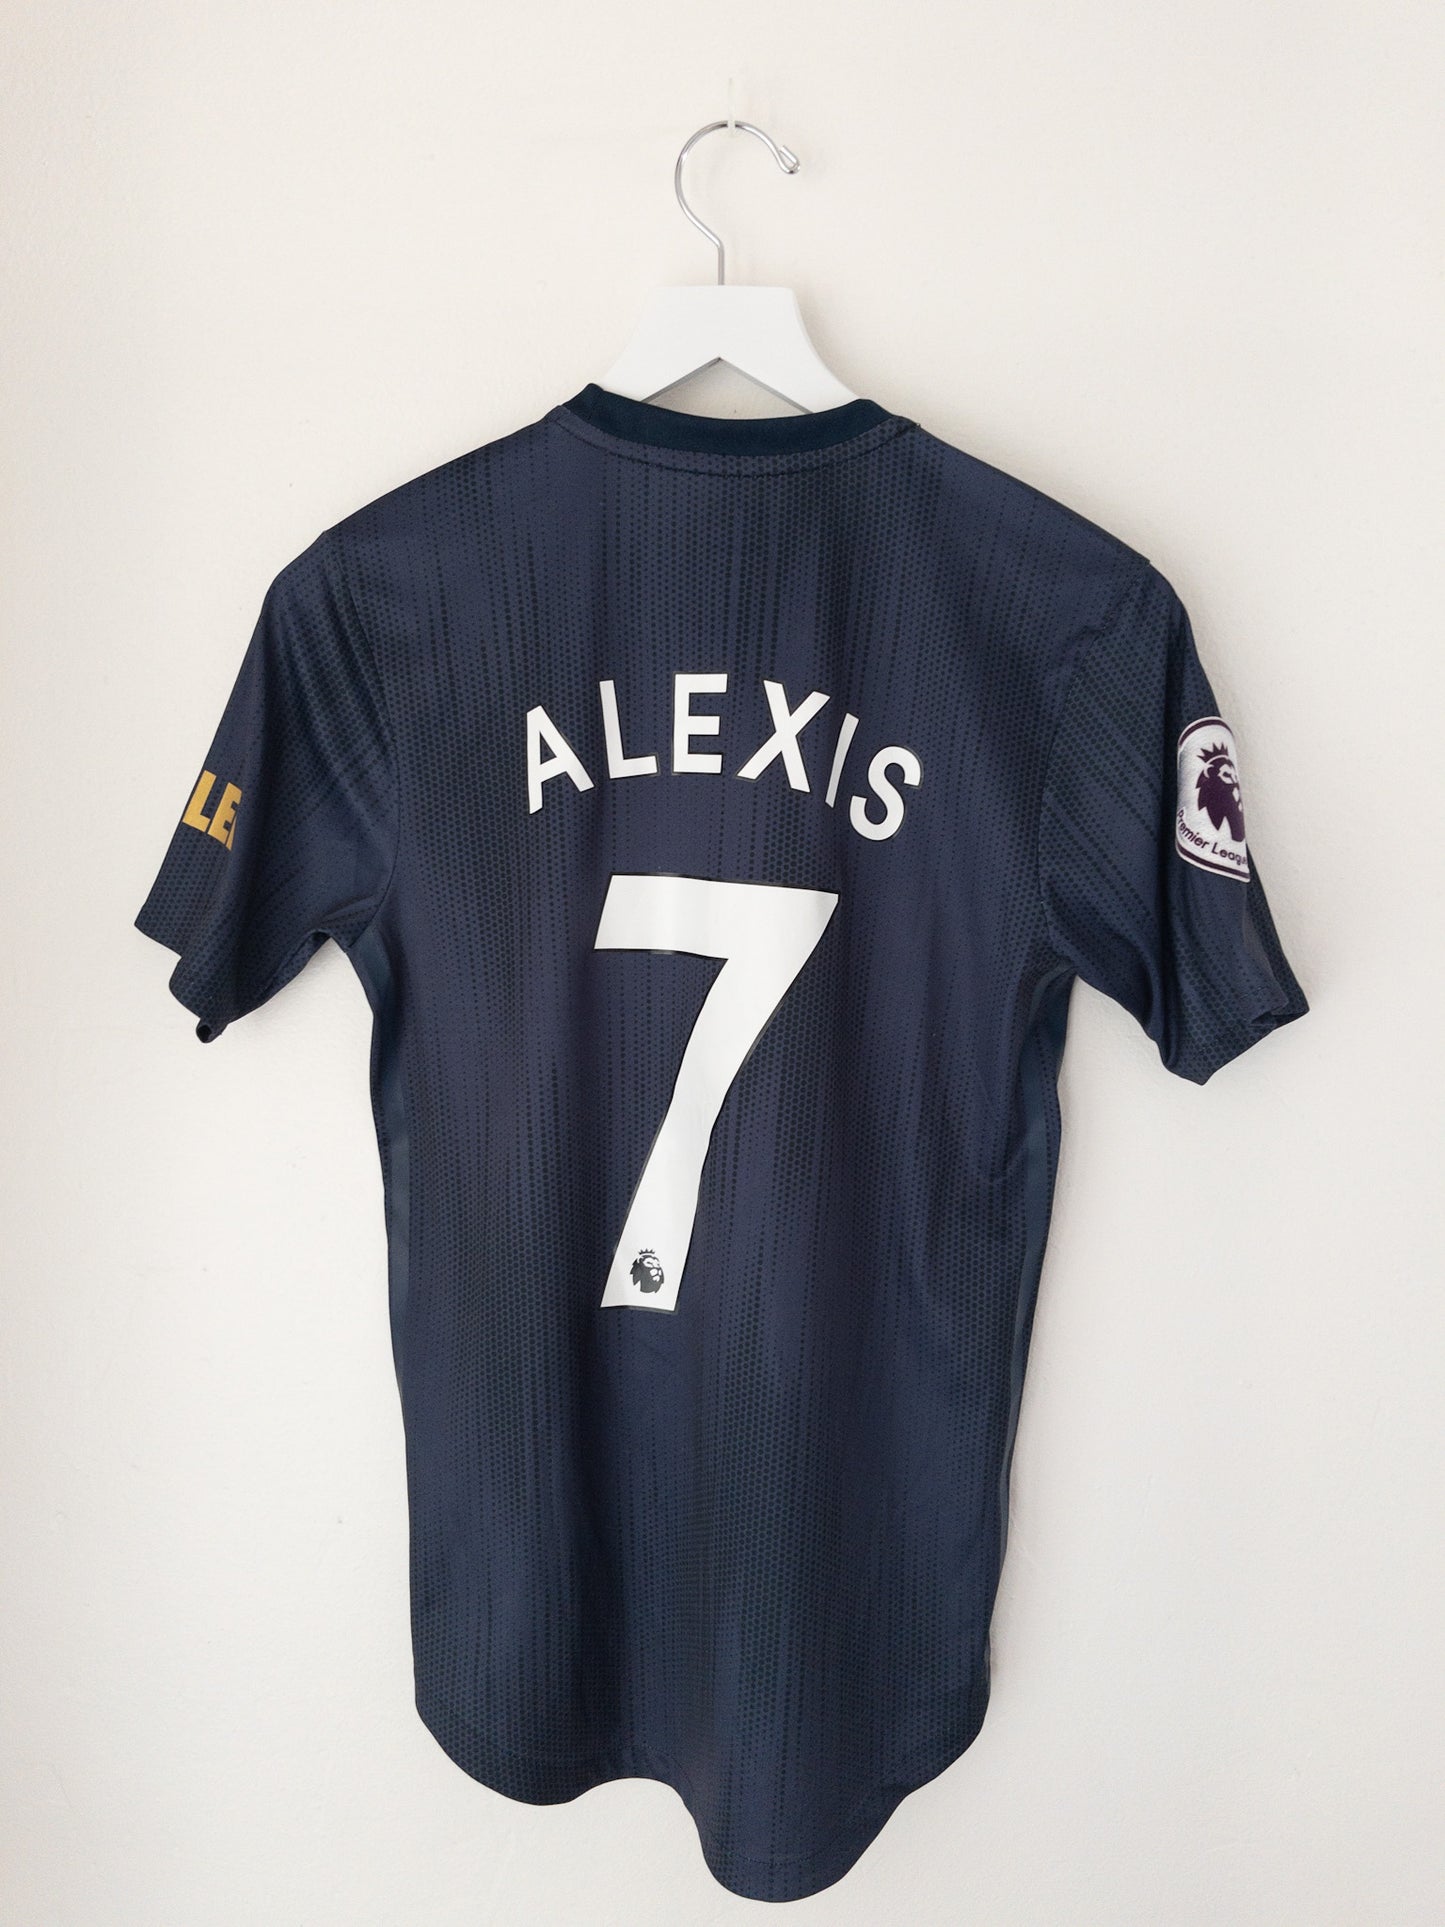 2018-19 Manchester United Alexis Sánchez Third